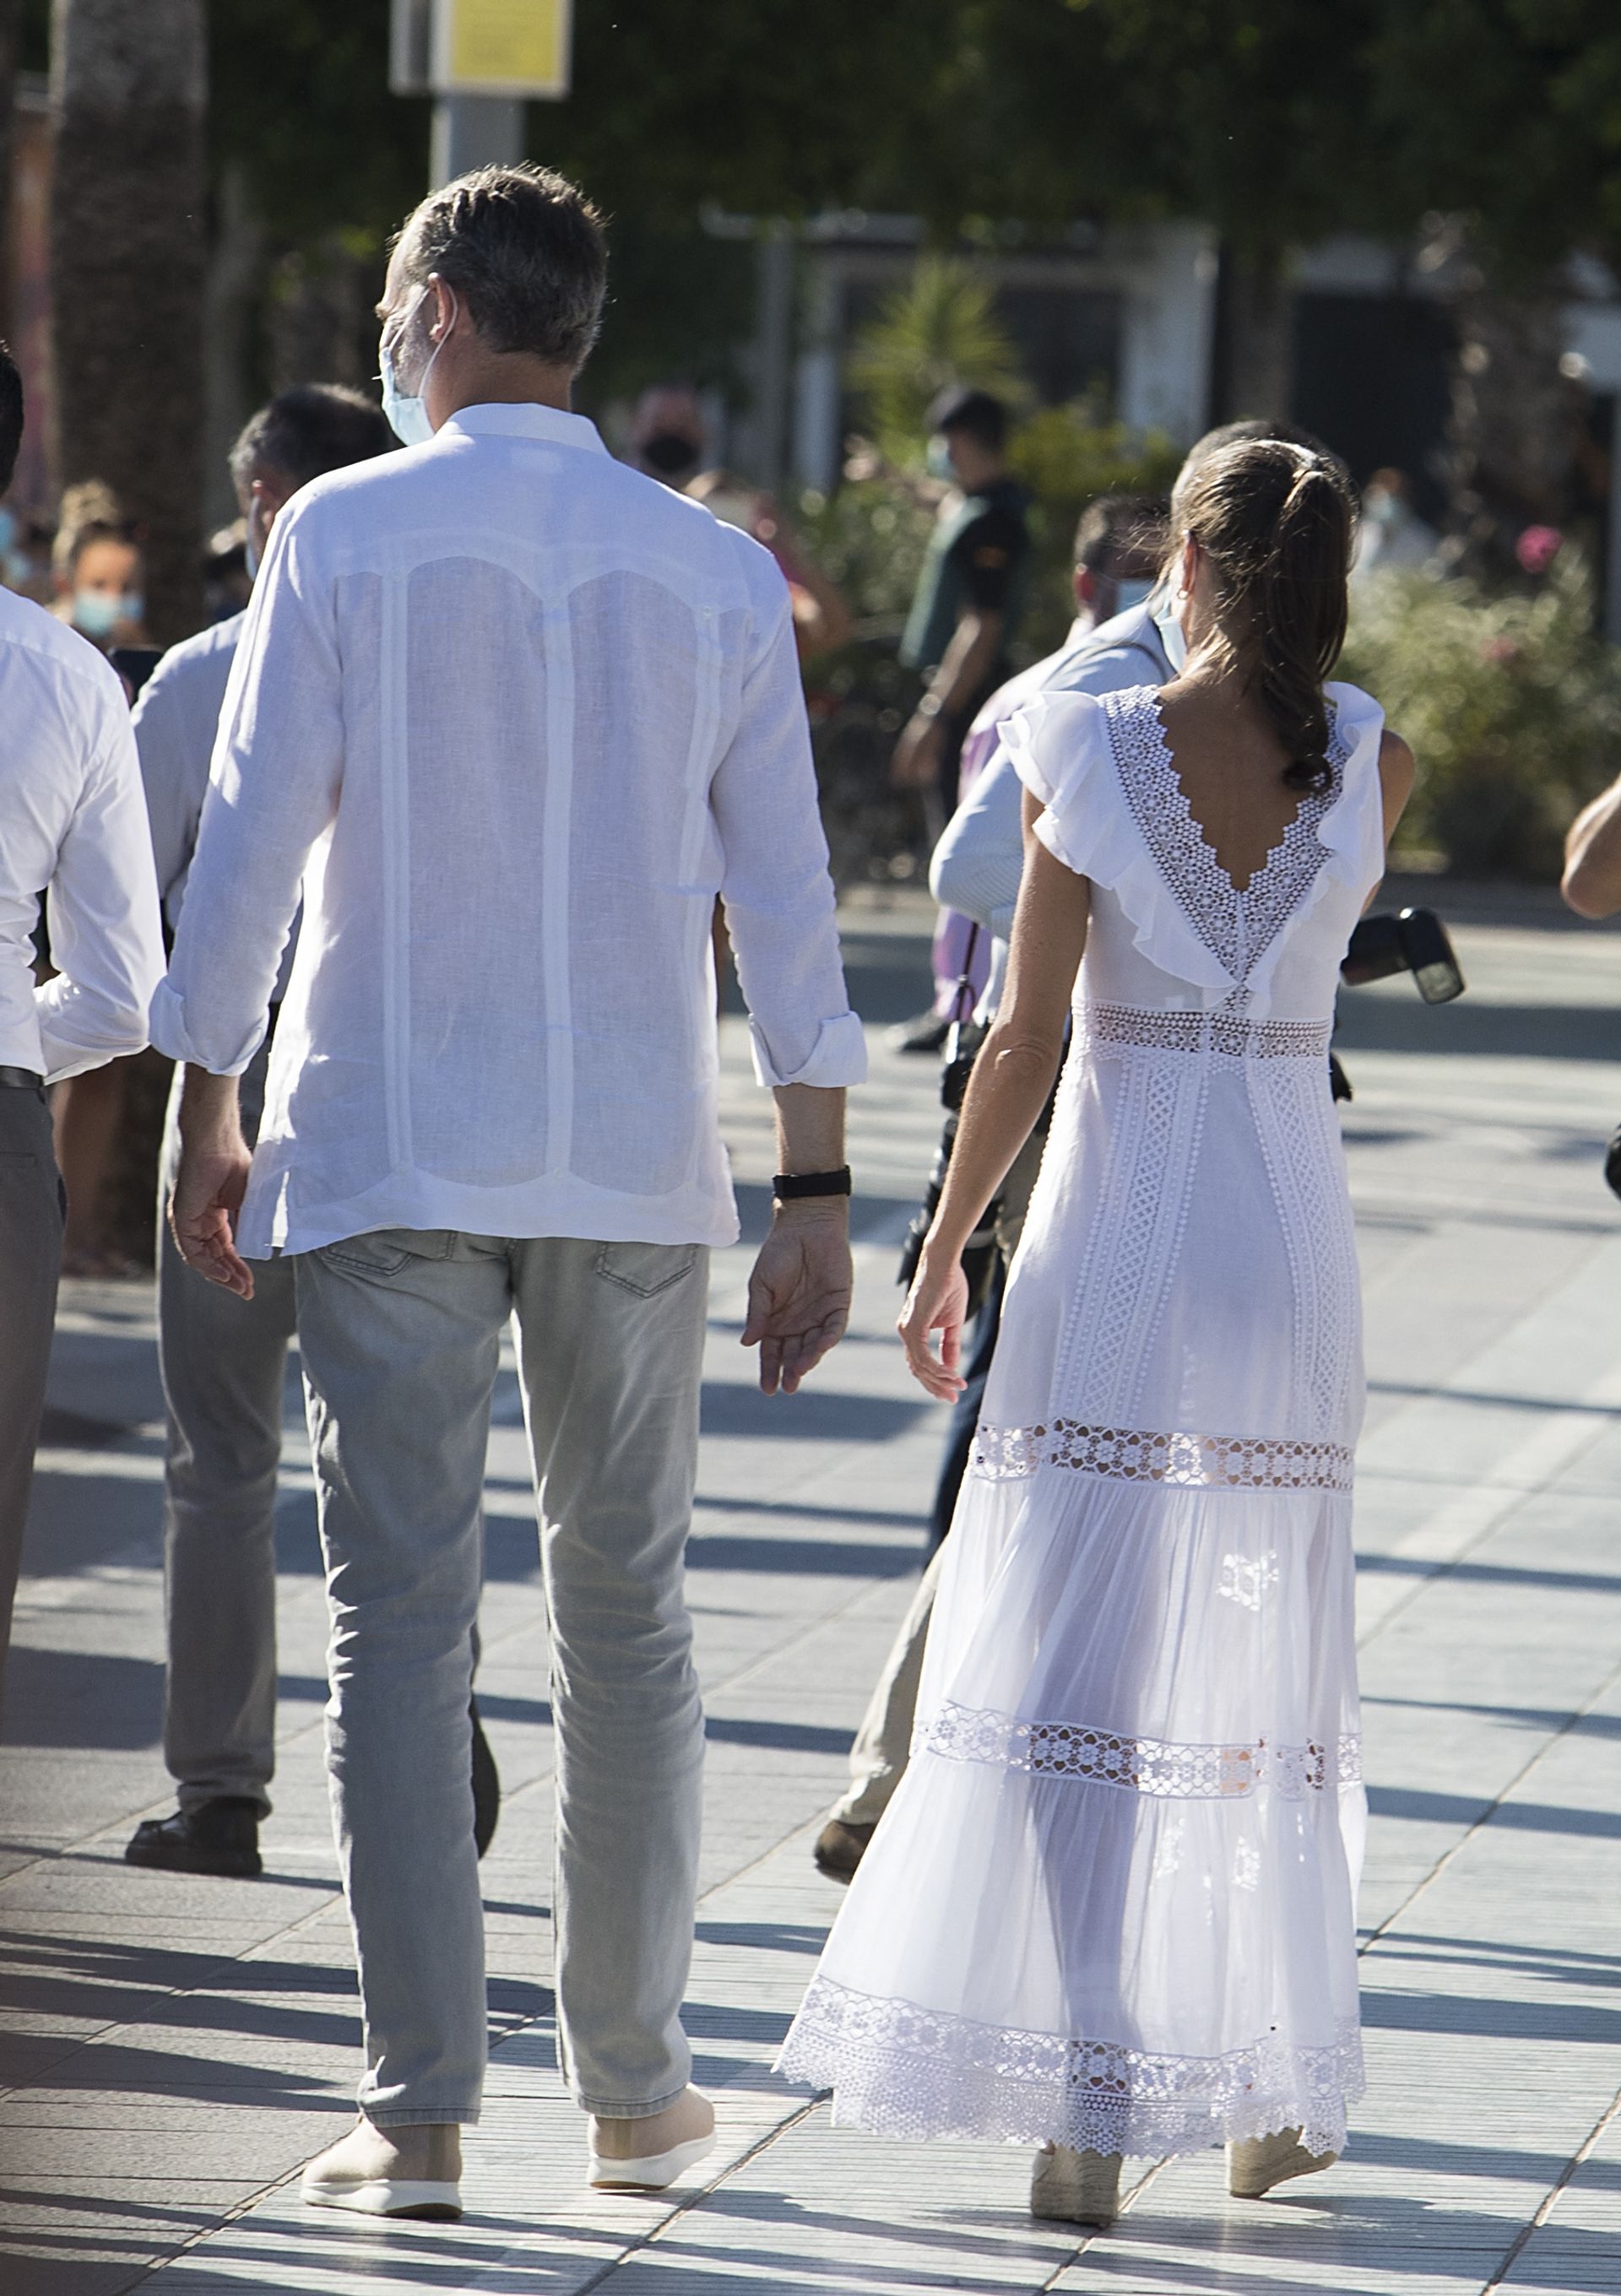 Koningin-Letizia-jurk-wit-doorschijnend